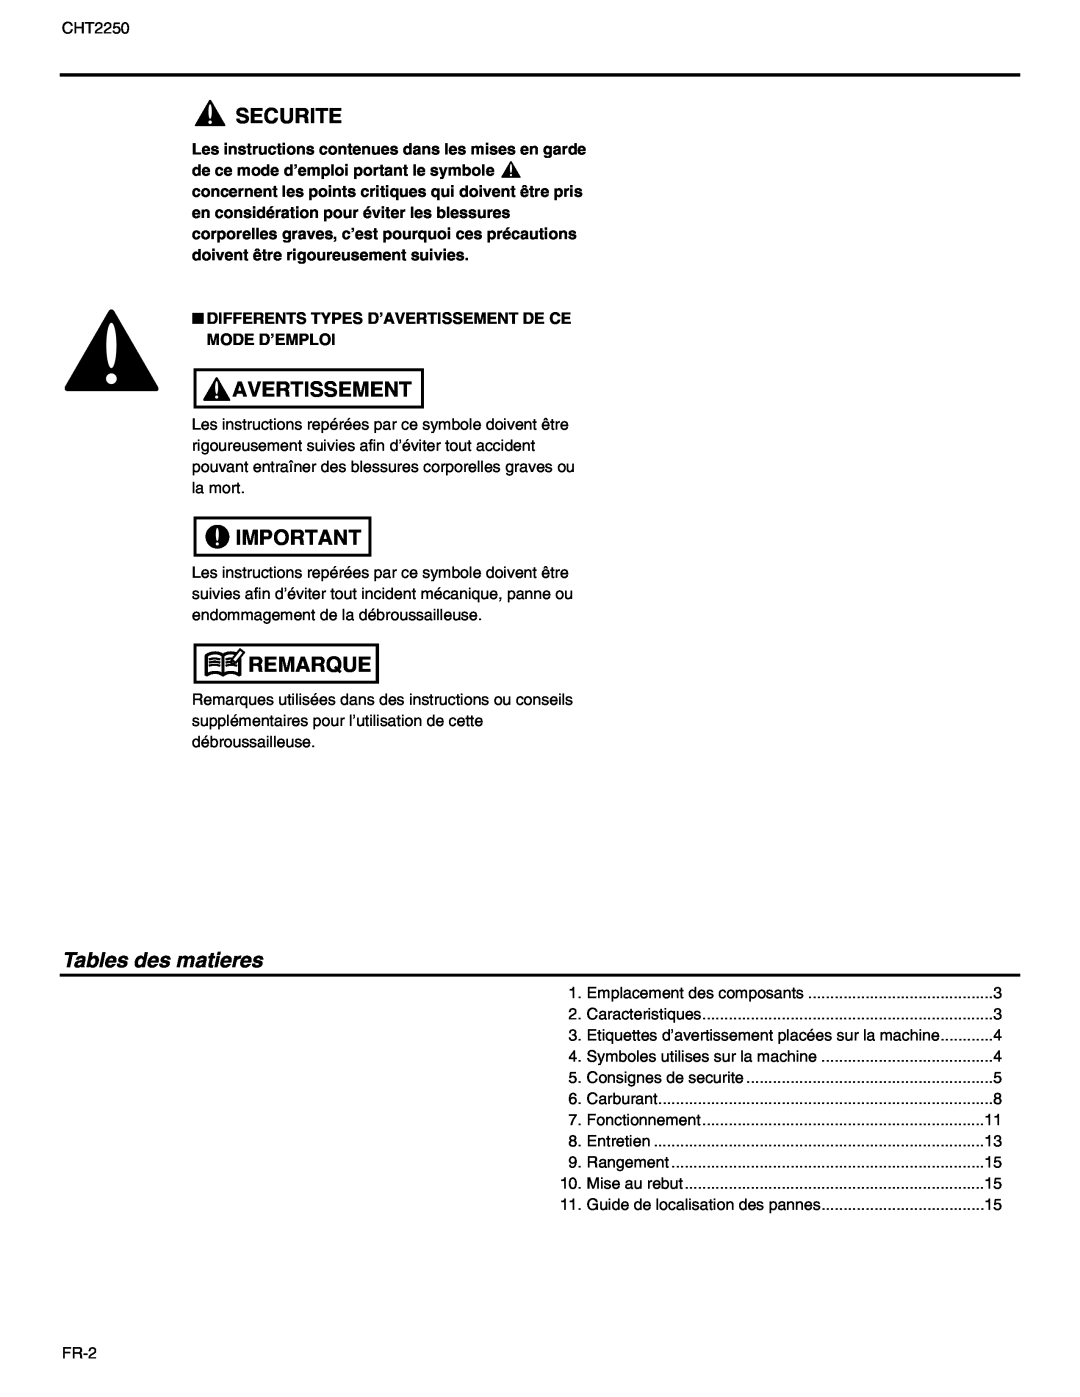 RedMax CHT2250 manual Securite, Avertissement, Remarque, Tables des matieres 